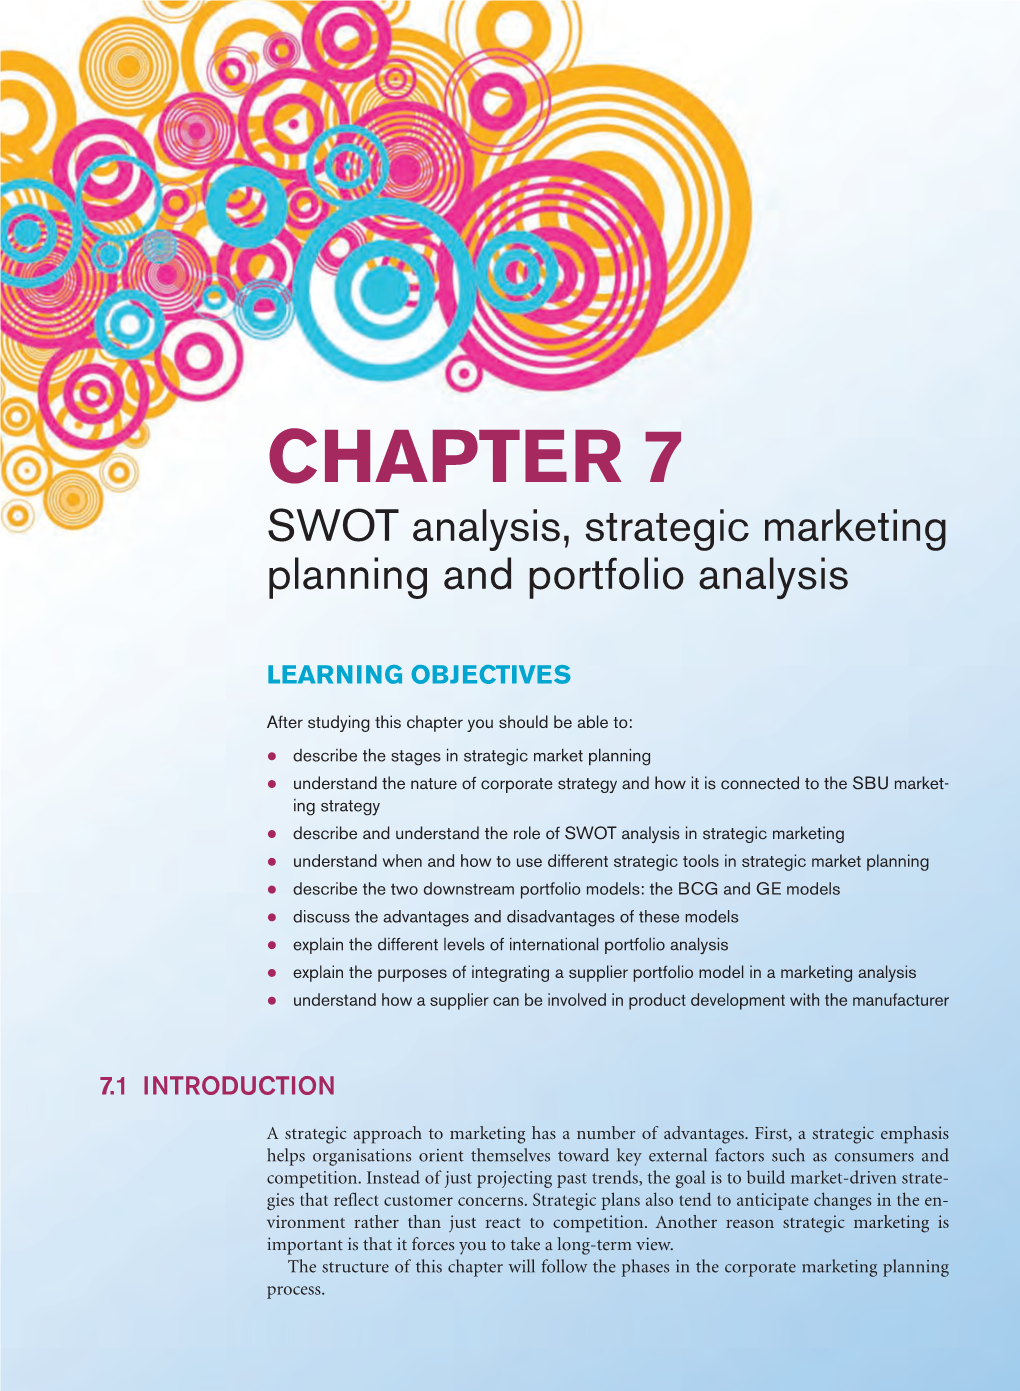 CHAPTER 7 SWOT Analysis, Strategic Marketing Planning and Portfolio Analysis